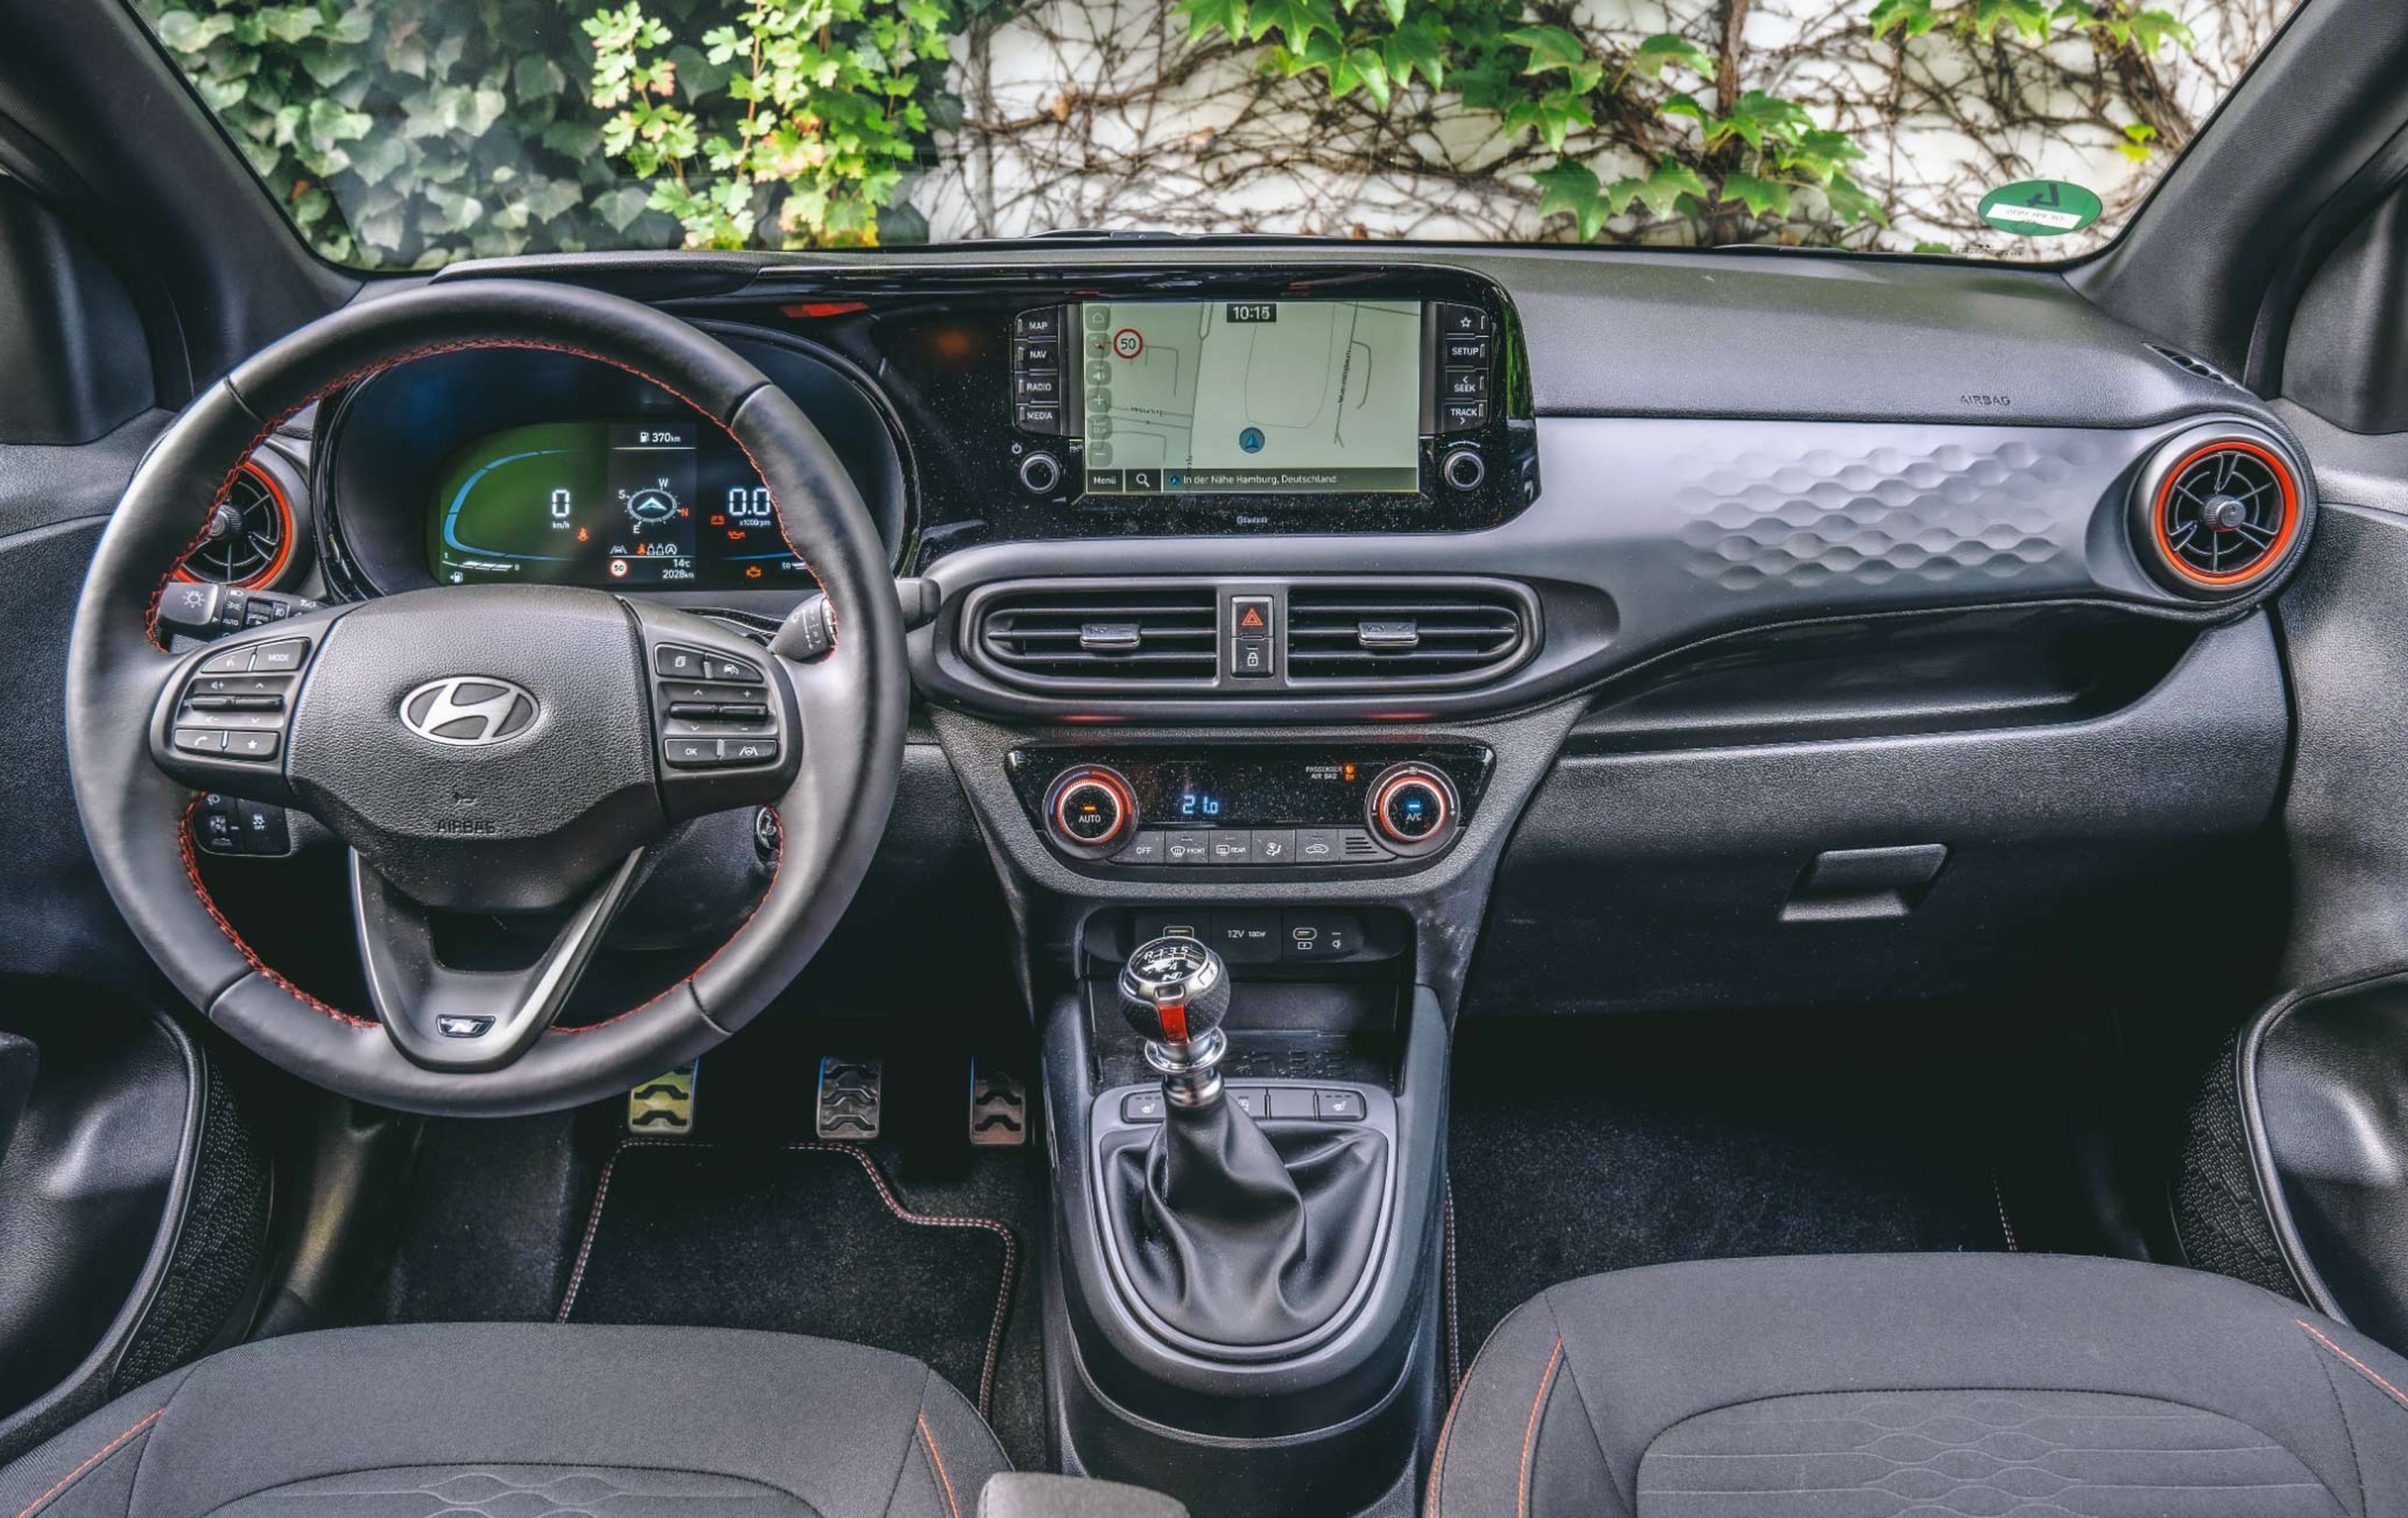 Prueba del Hyundai i10 N Line cockpit